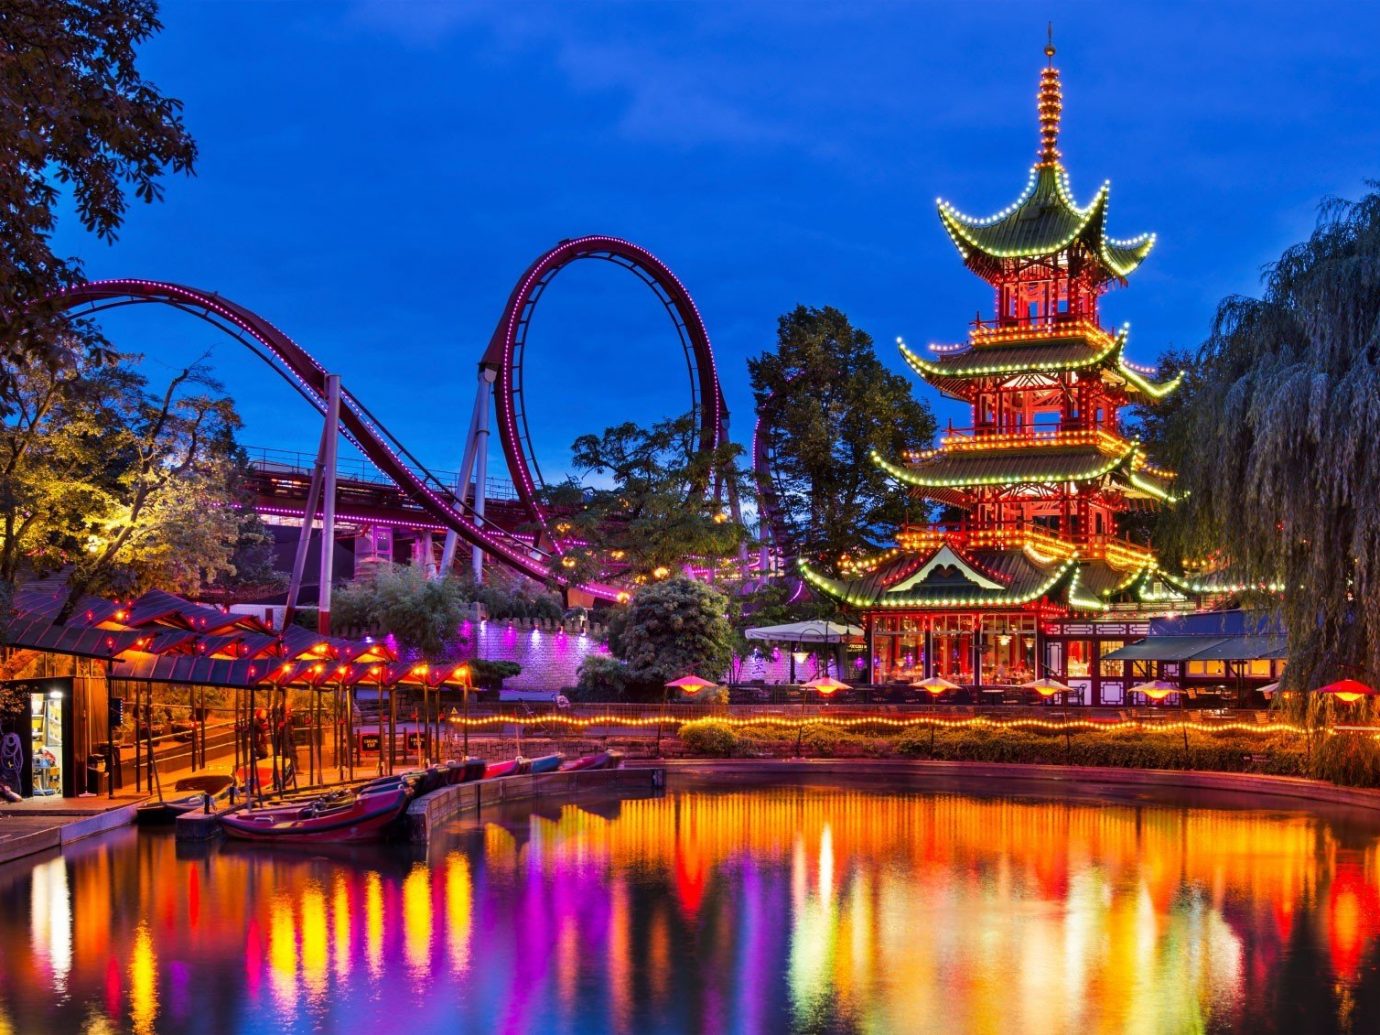 Offbeat tree water outdoor sky landmark River amusement park night reflection park evening cityscape Resort temple colorful